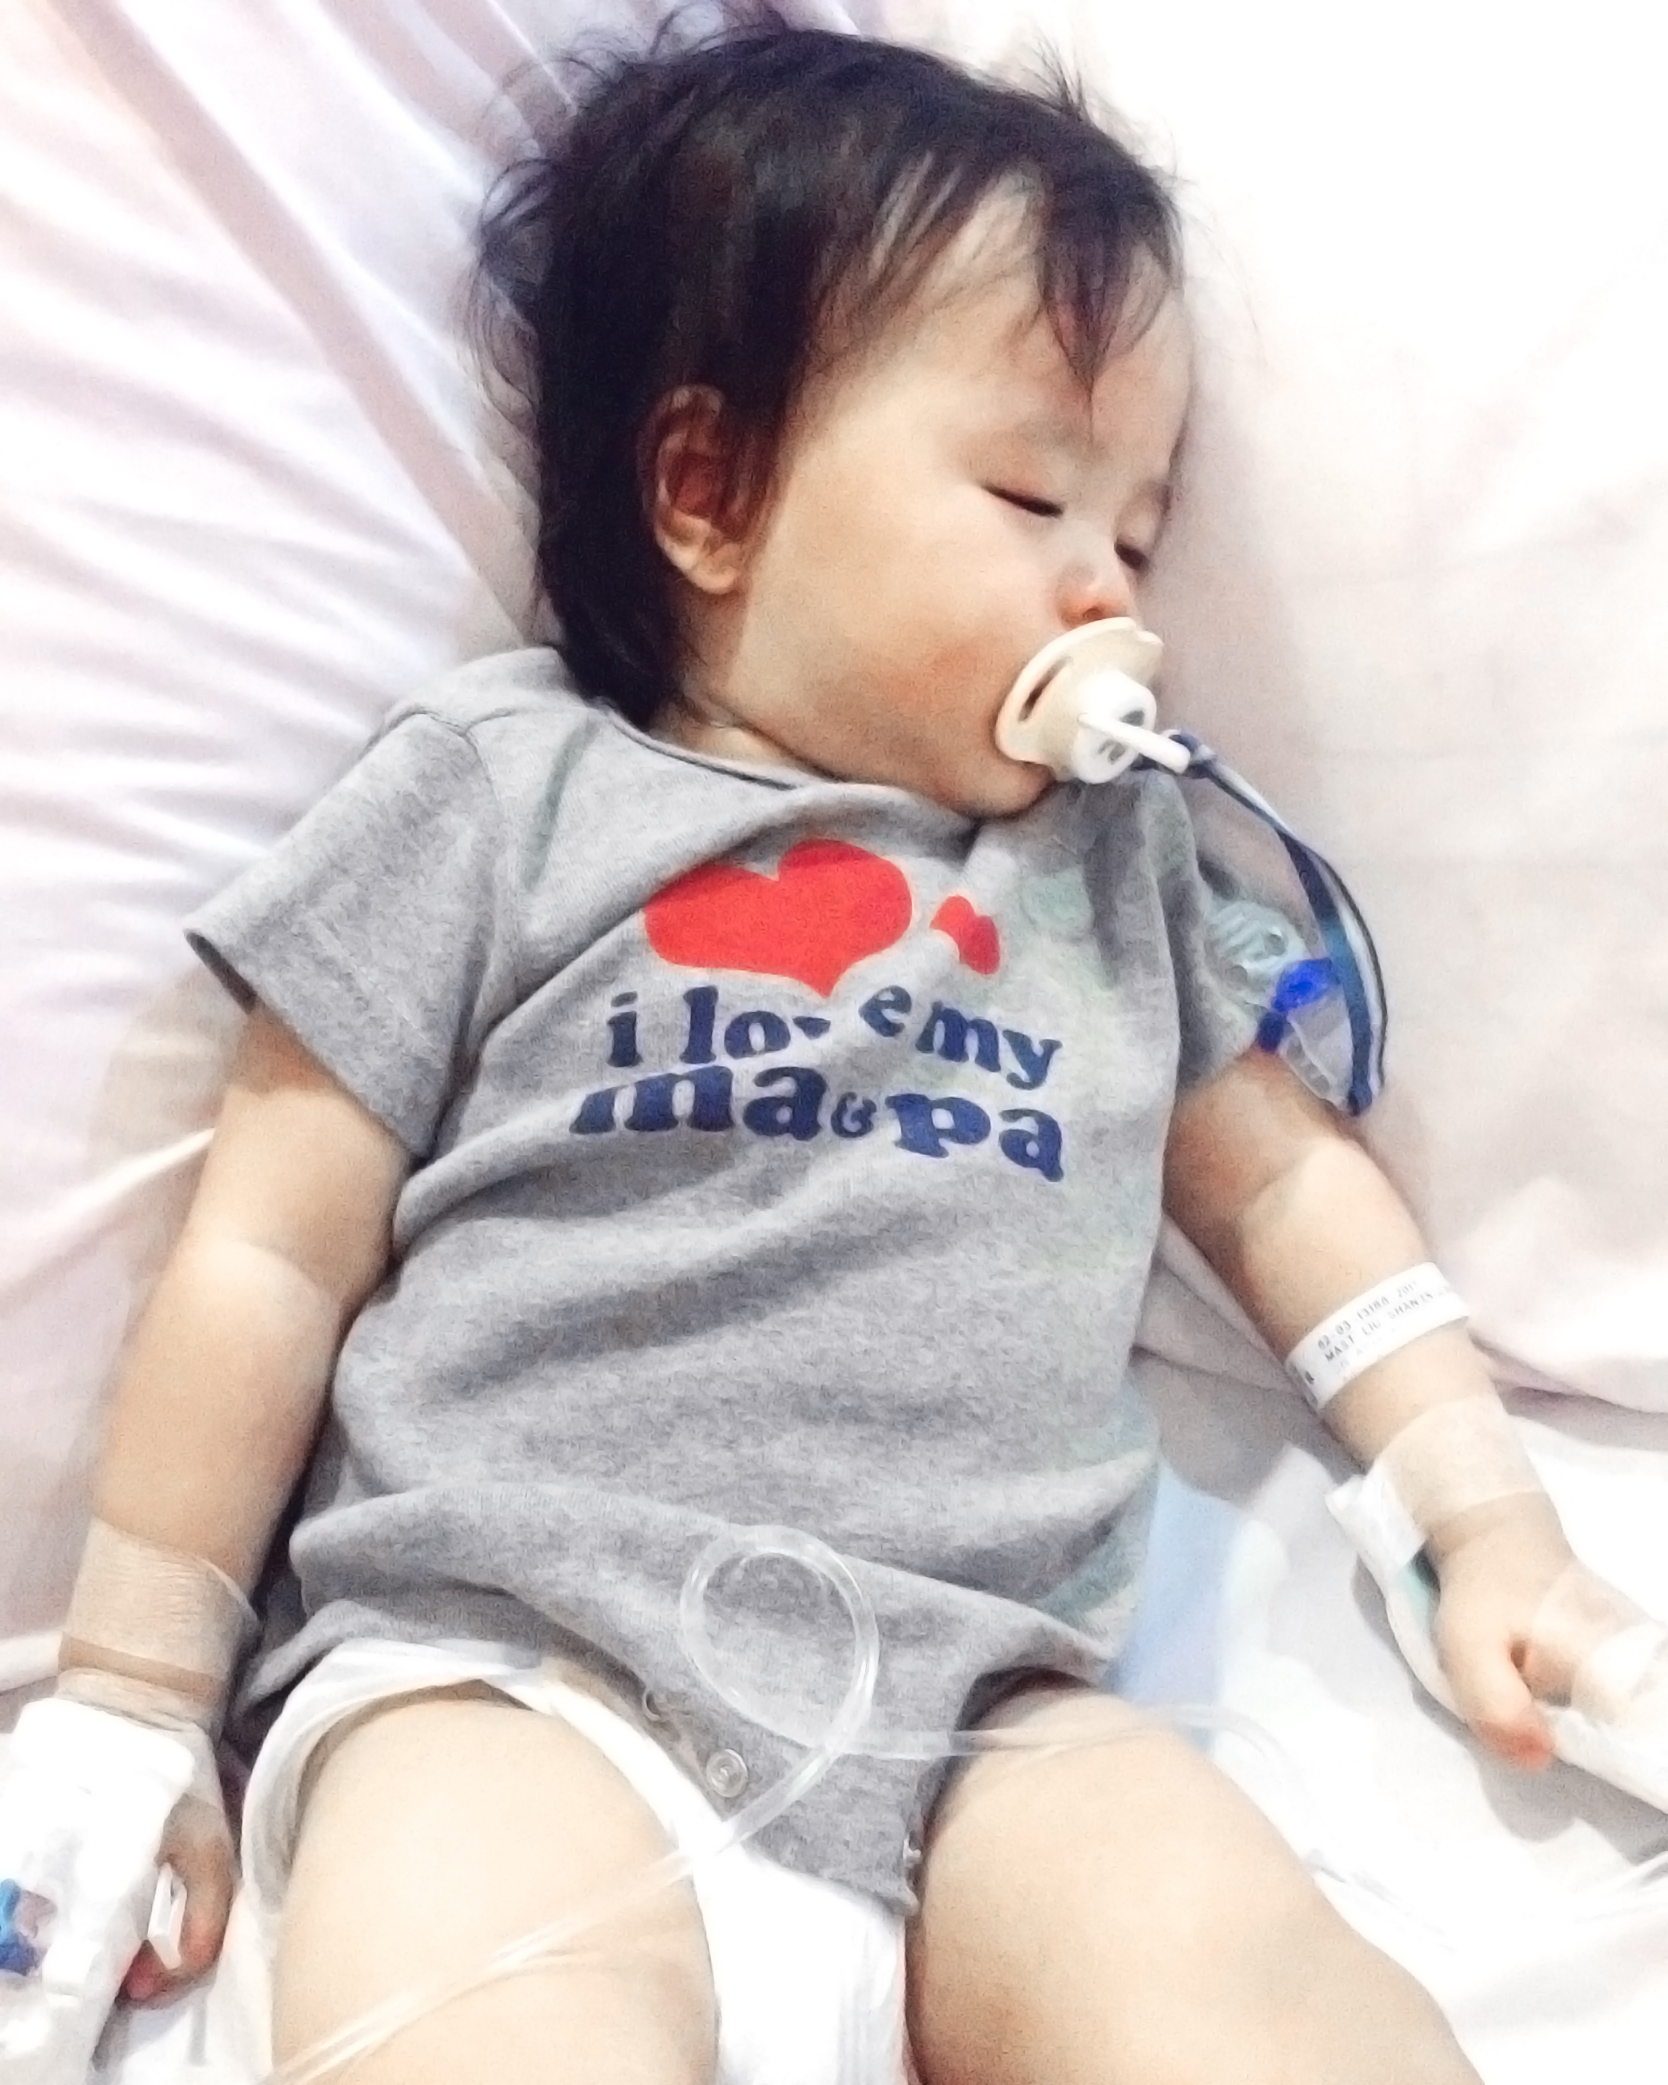 bronchiolitis hospitalization for child singapore thomson medical bill